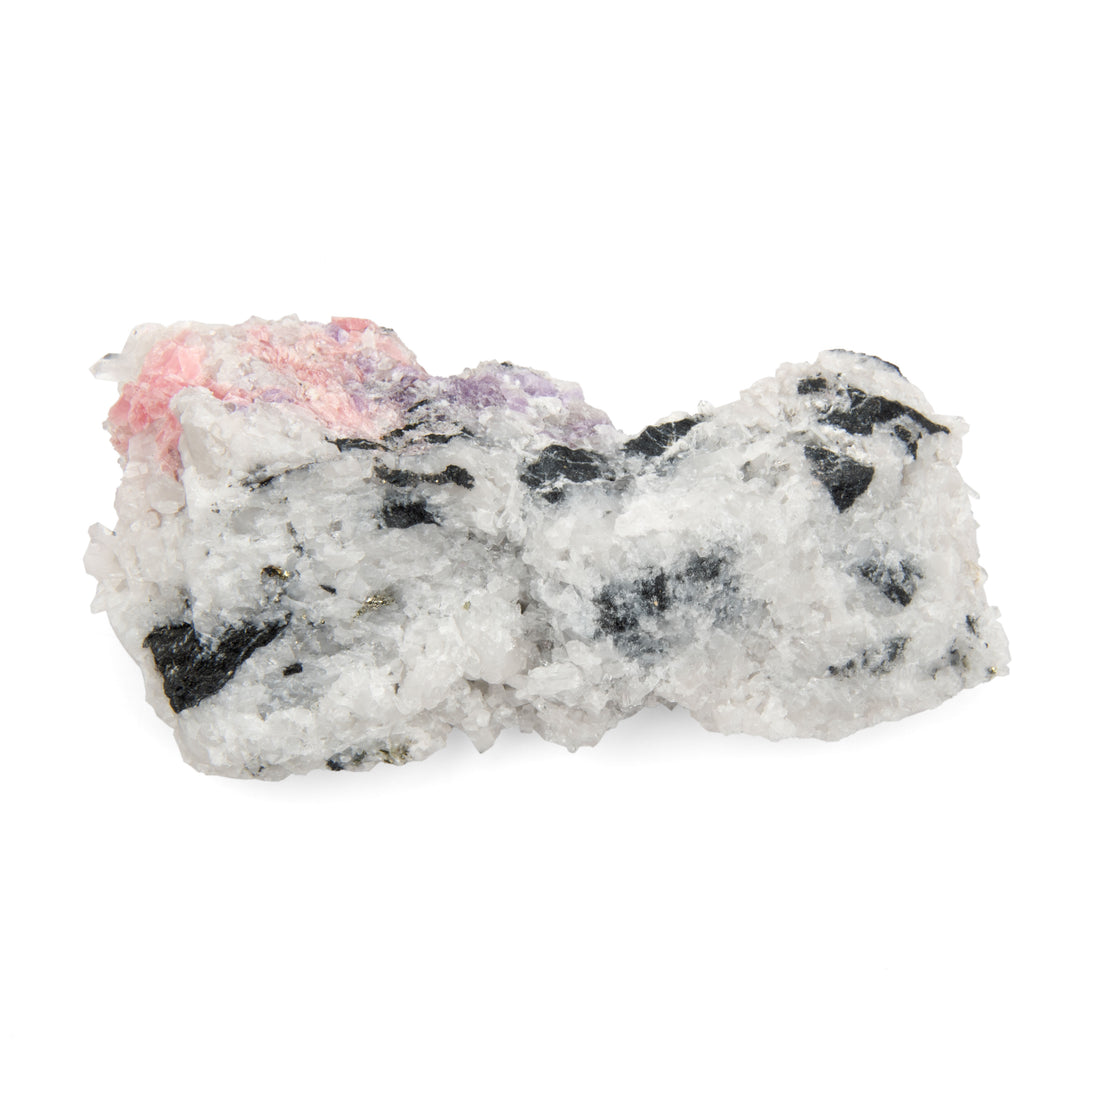 Rhodochrosite with Quartz, Fluorite, and Pyrite